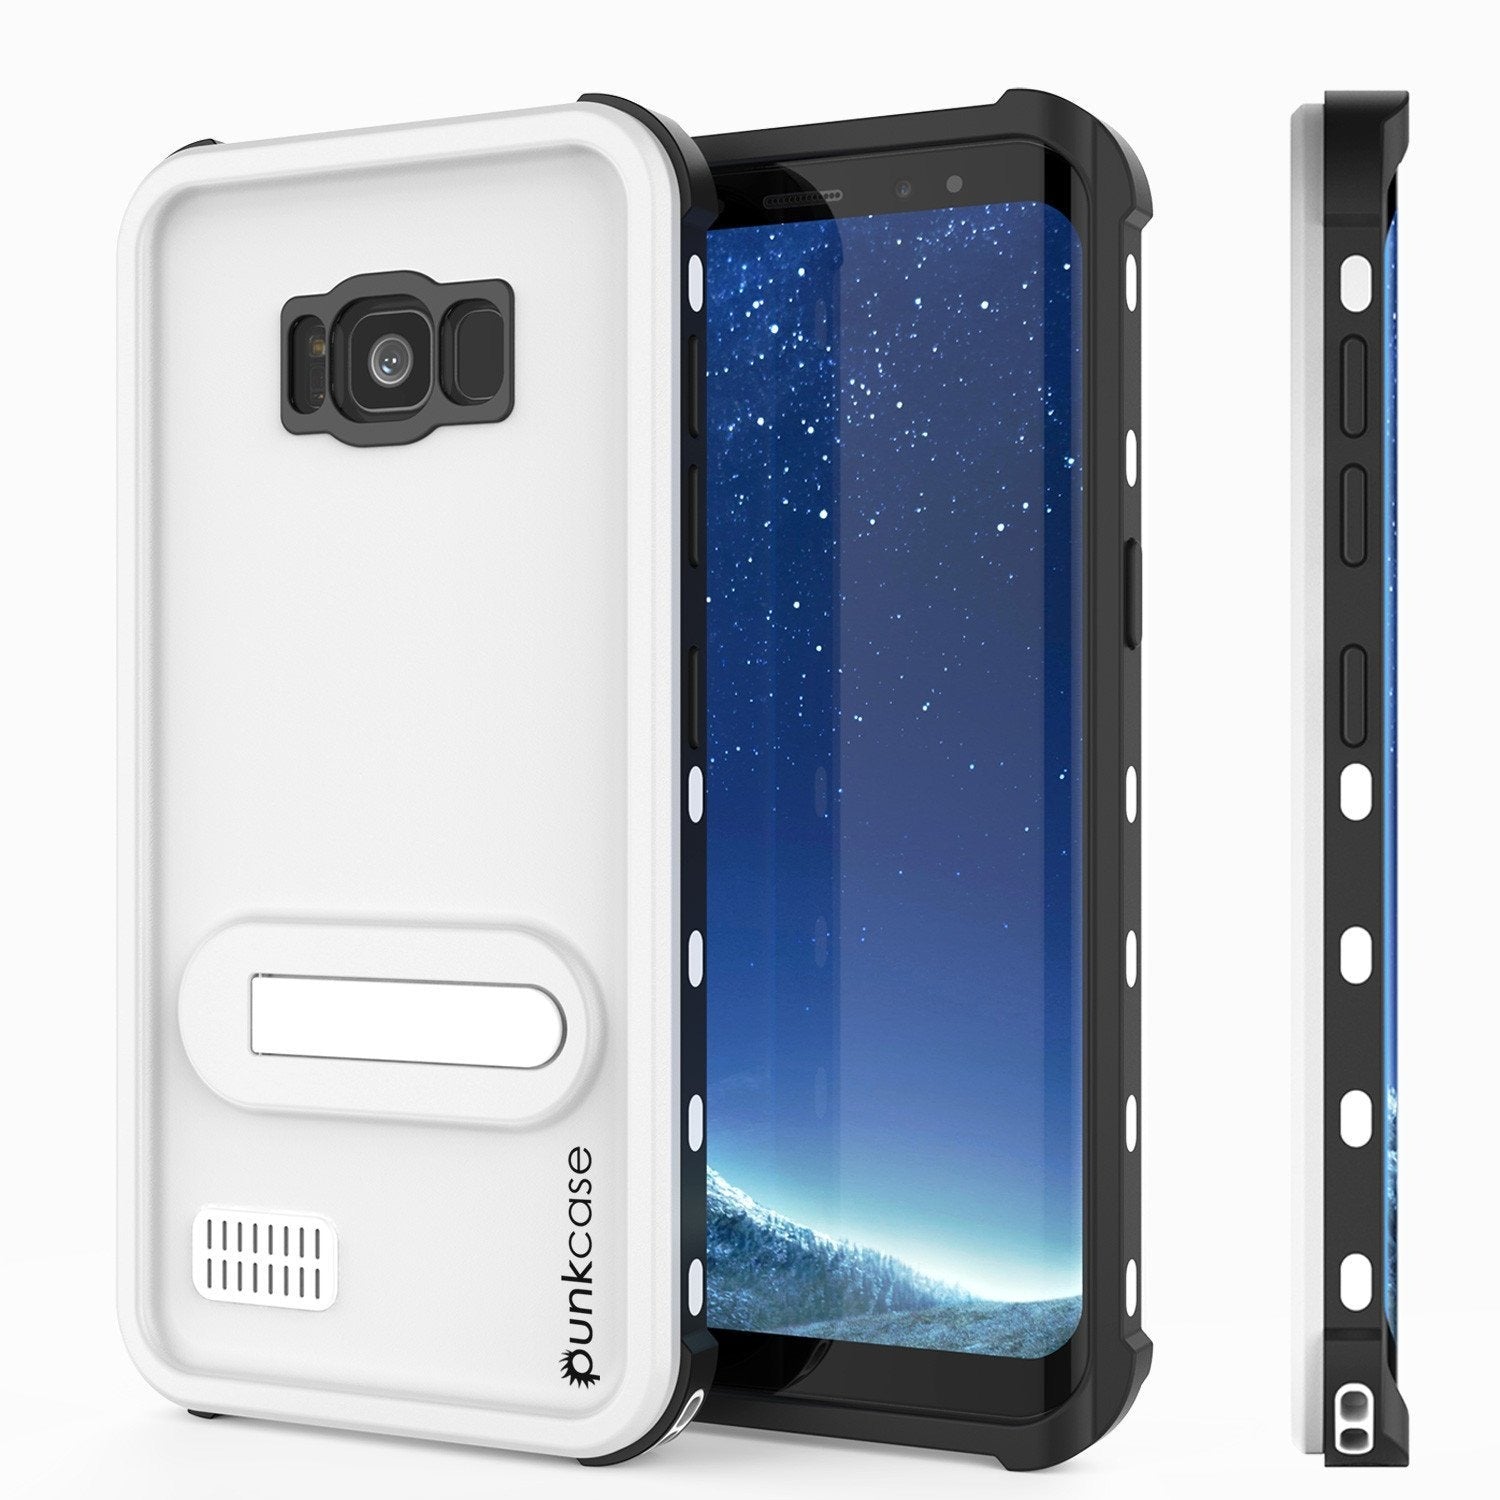 Galaxy S8 Waterproof Case, Punkcase [KickStud Series] [Slim Fit] [IP68 Certified] [Shockproof] [Snowproof] Armor Cover W/ Built-In Kickstand [WHITE]